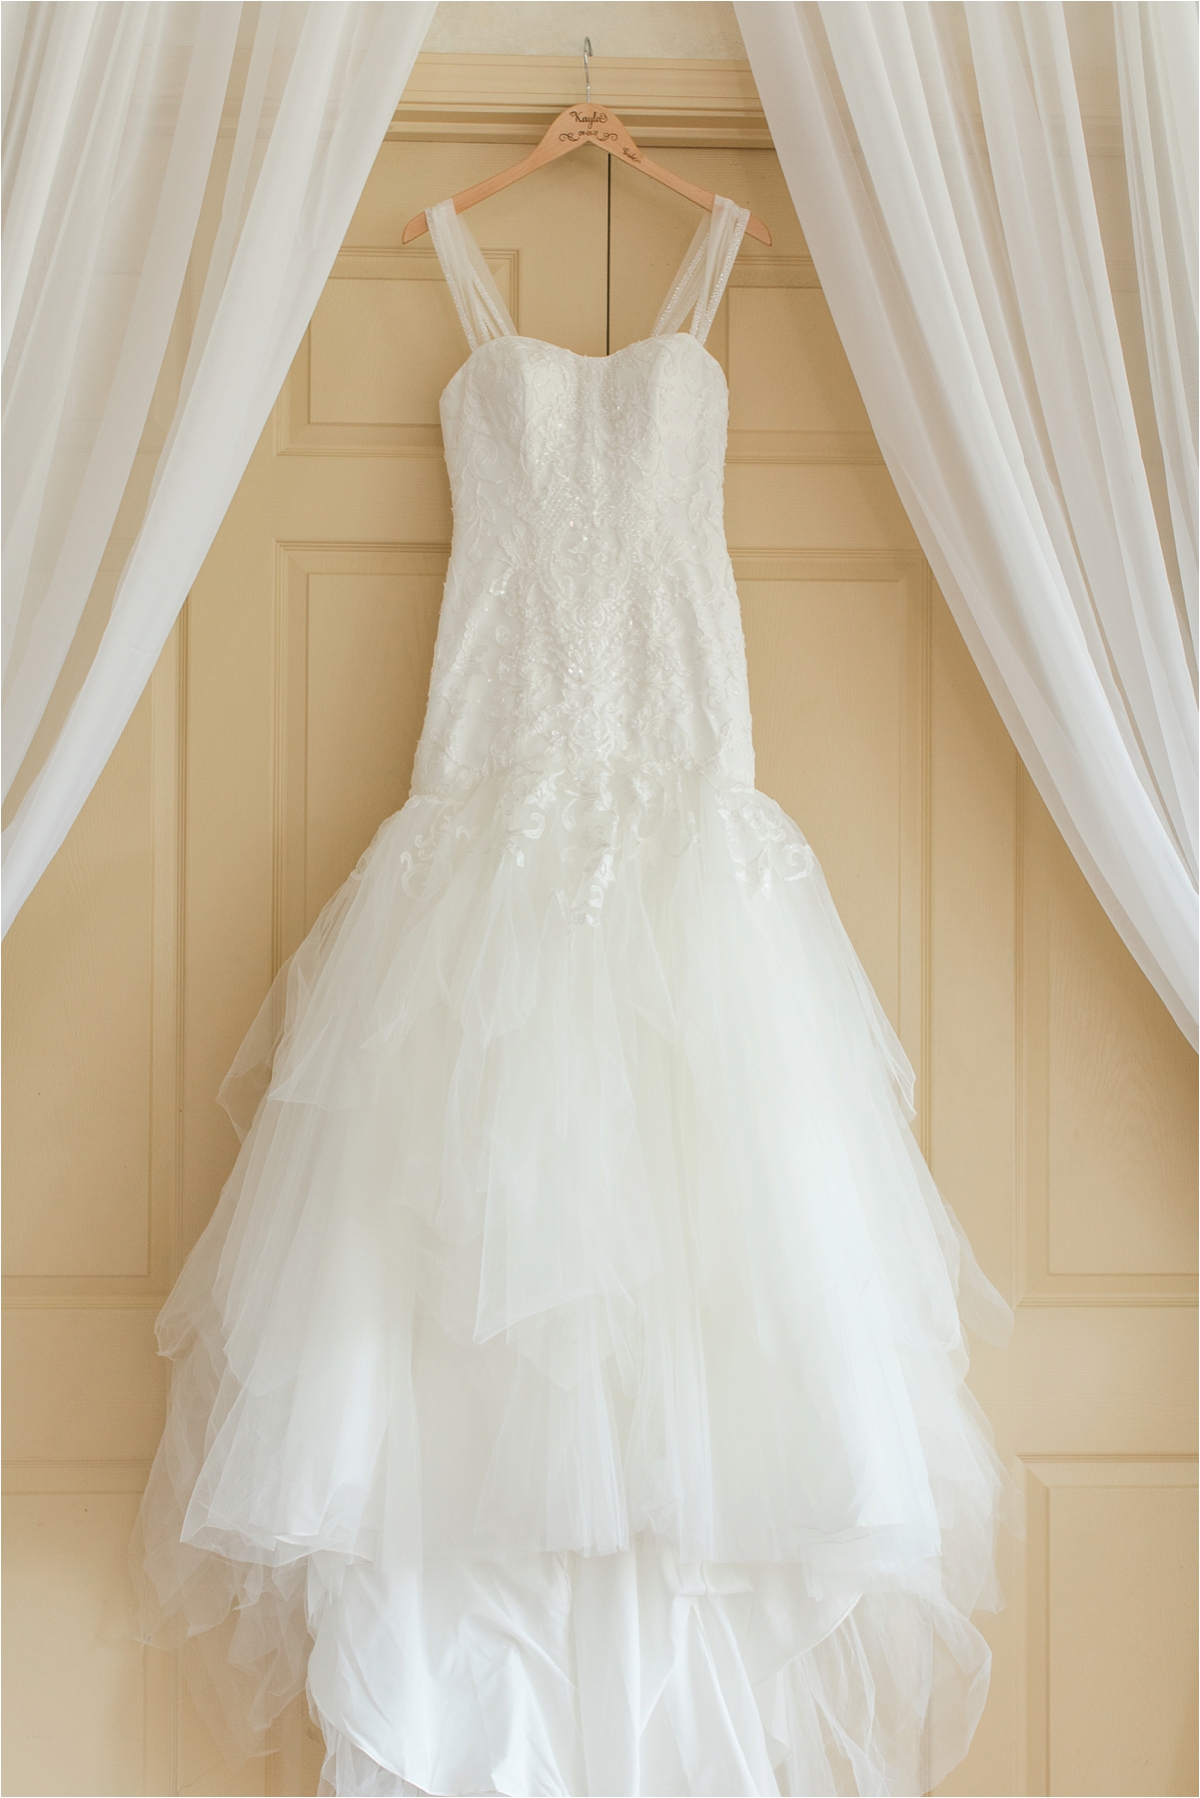 tule-wedding-dress-skirt-mermaid-fit-lace-detailing-layered-skirt